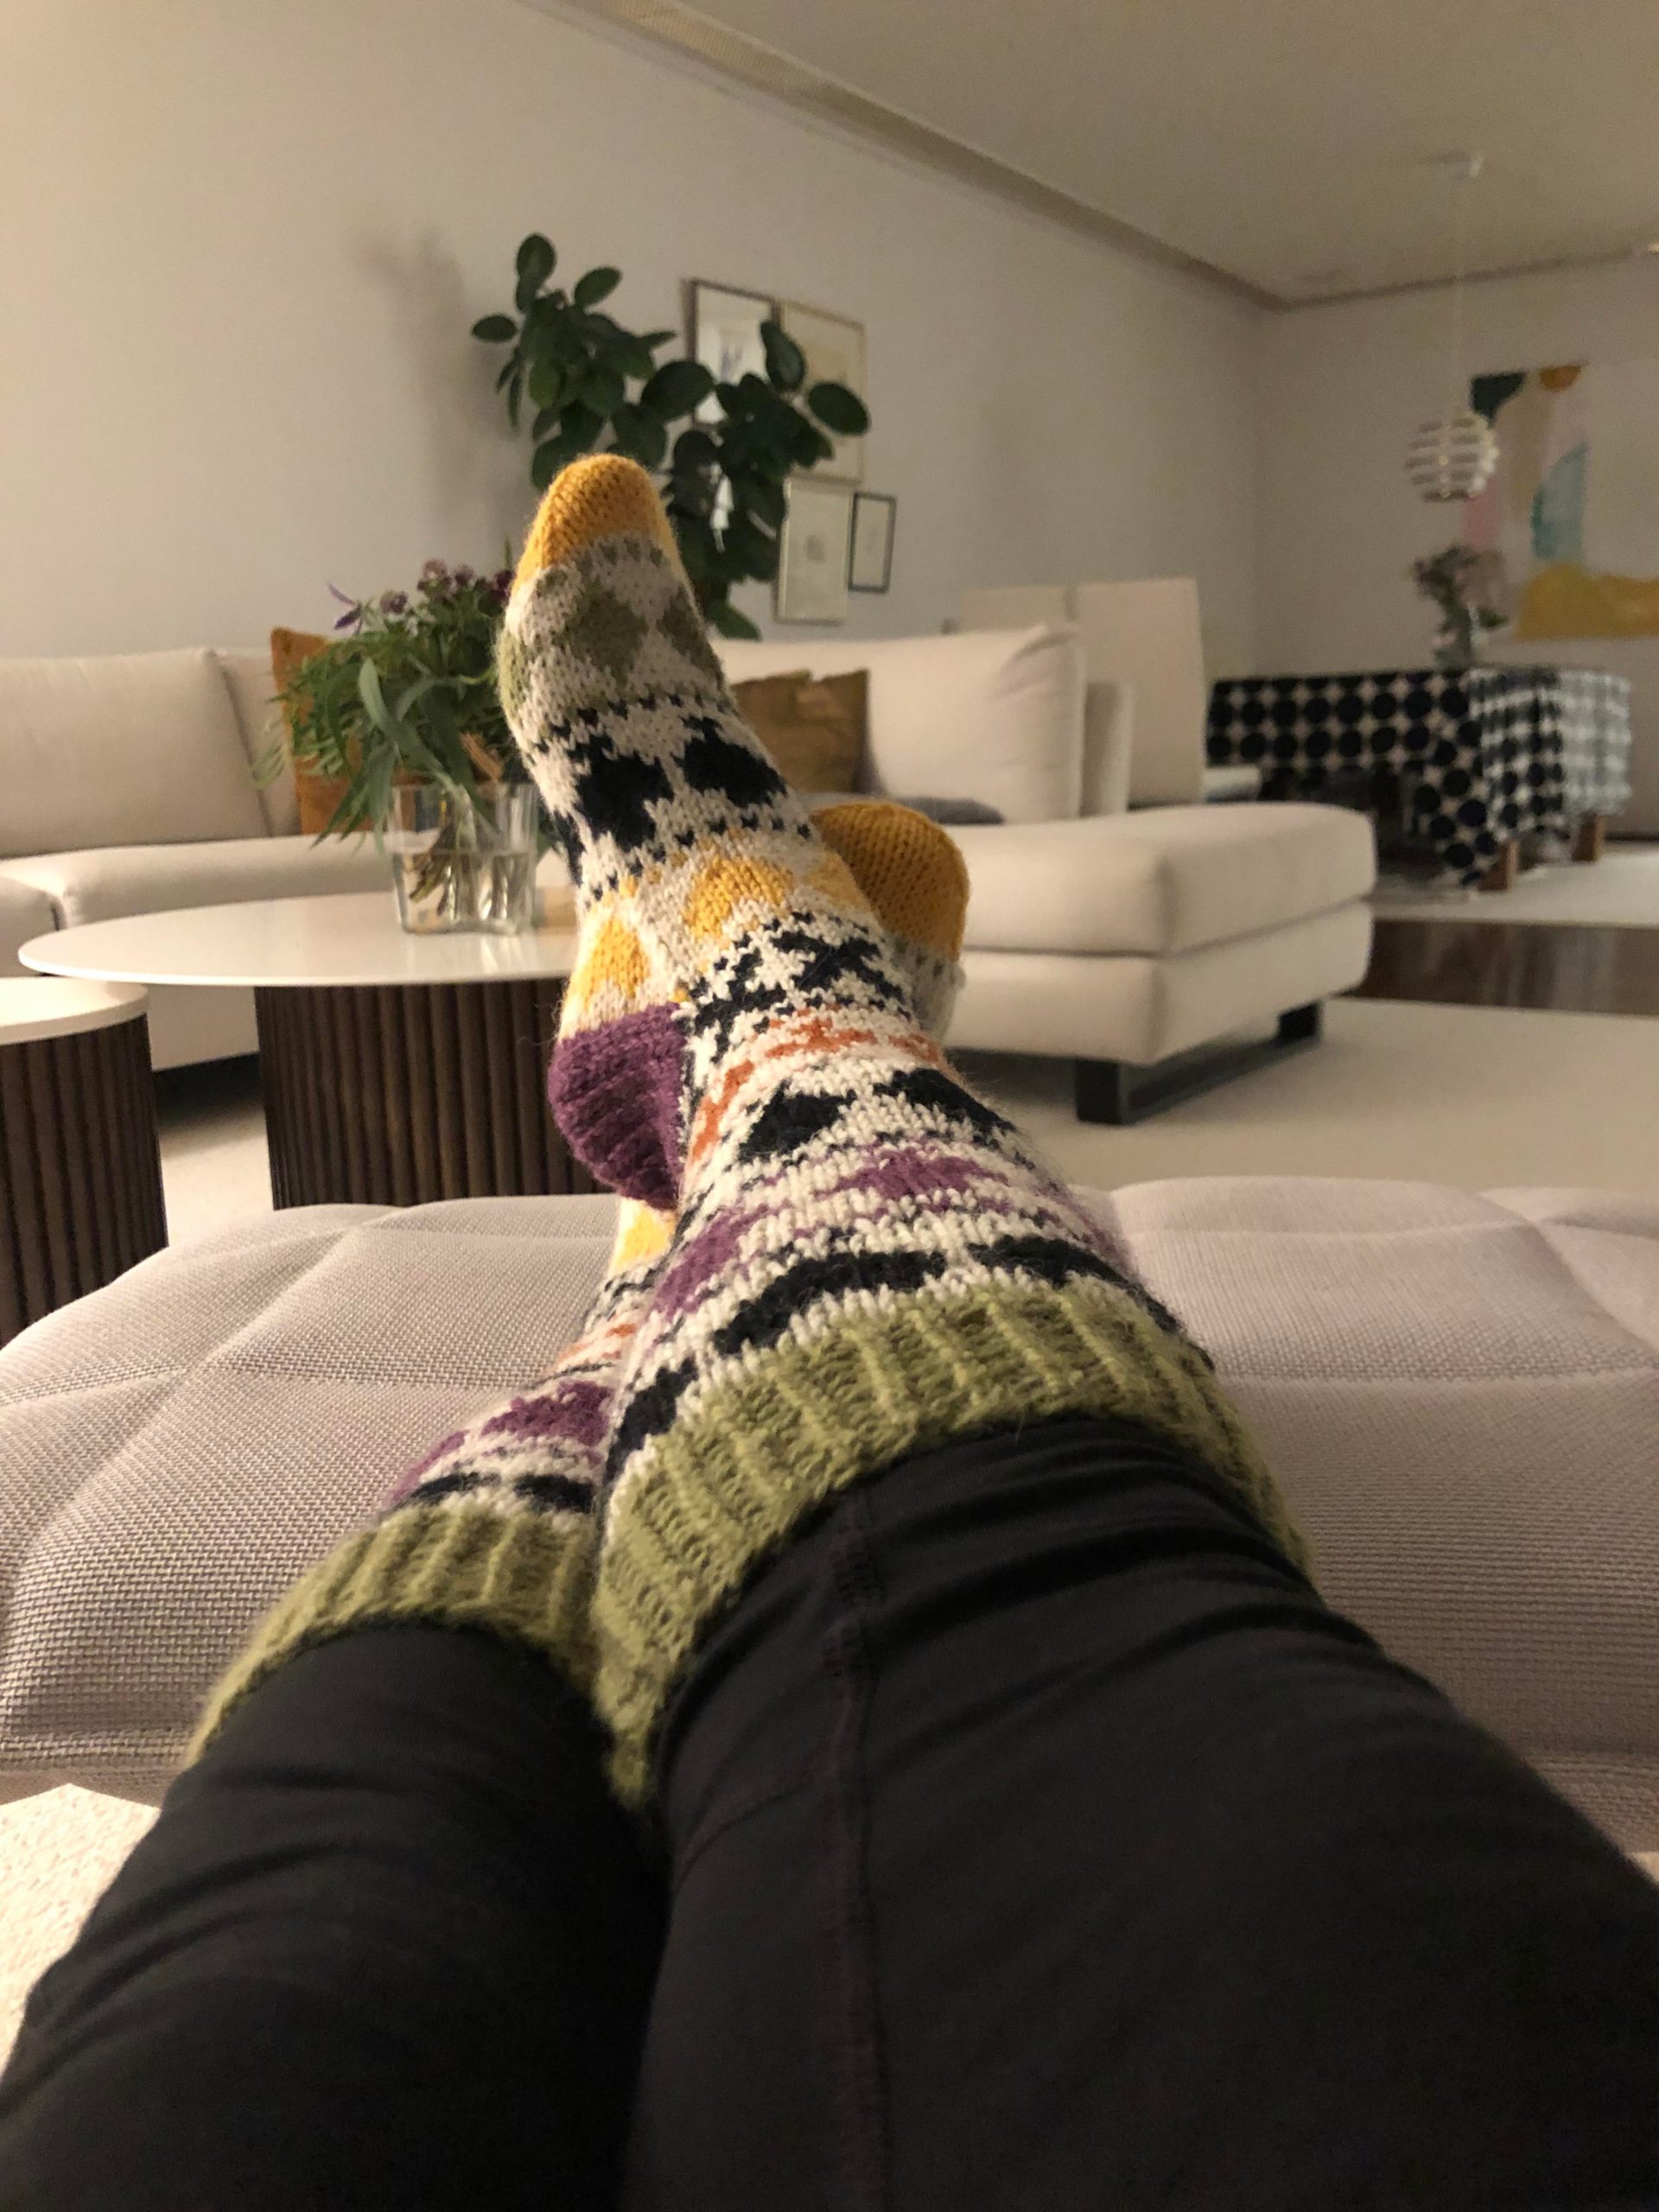 Uudet villasukat jalassa sohvalla